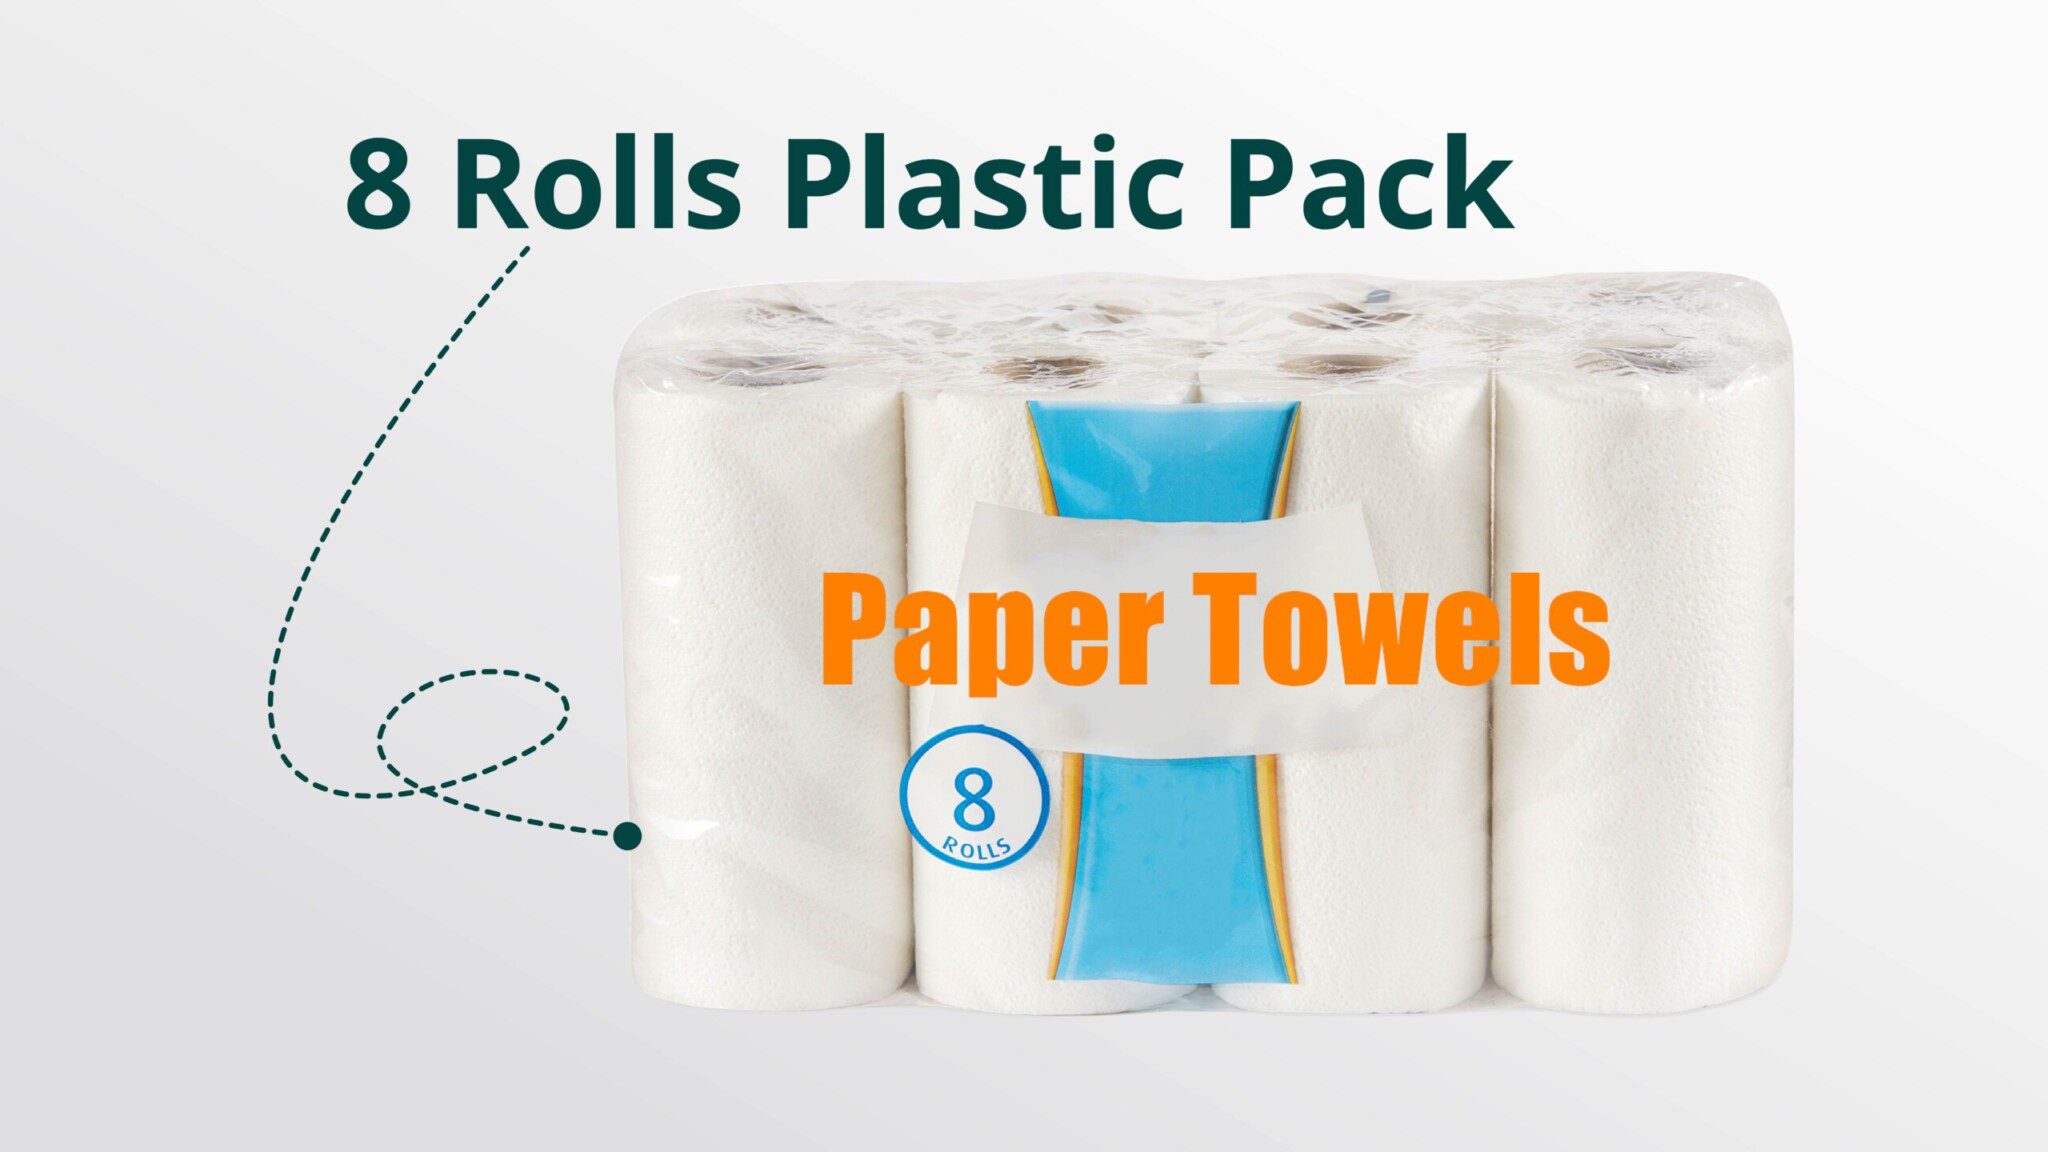 8 rolls plastic pack kitchen paper towels